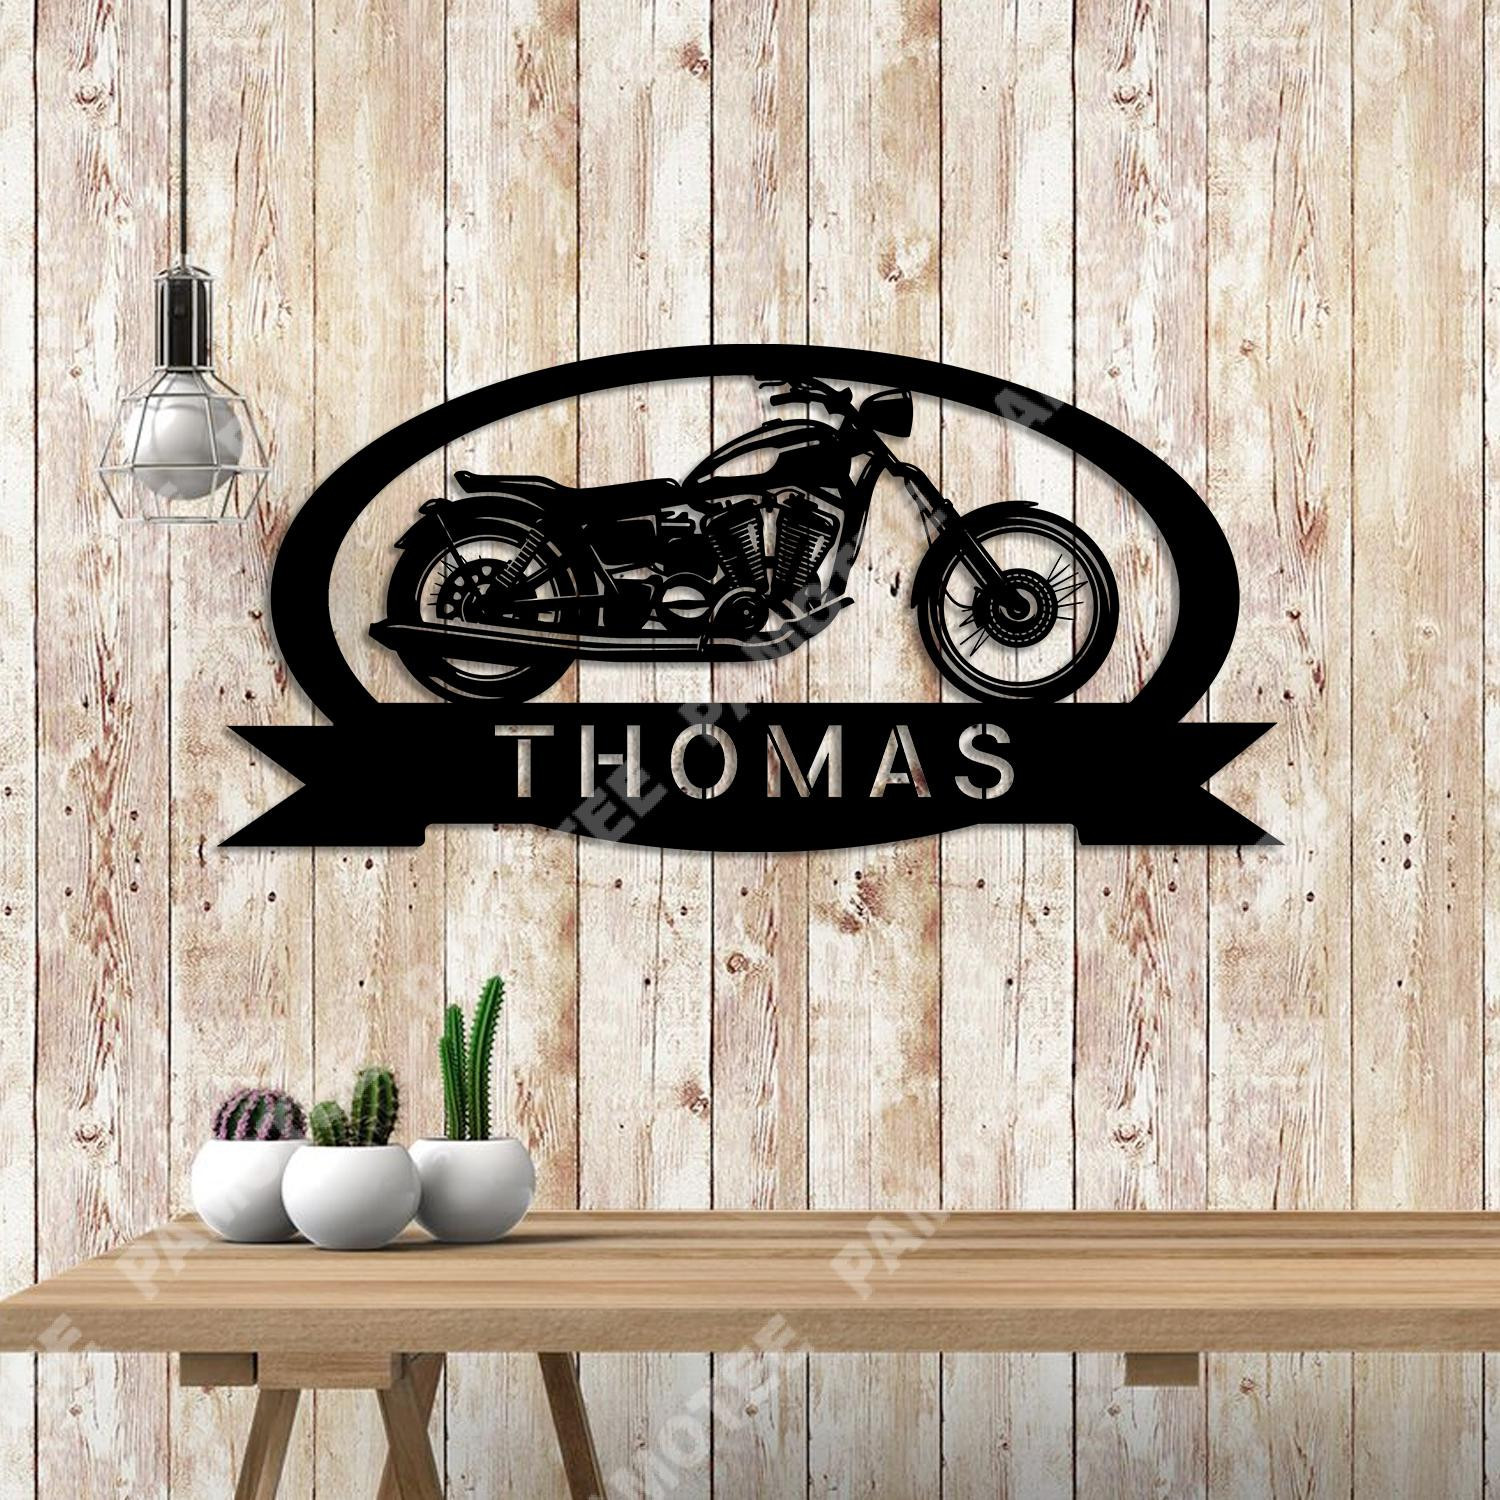 Personalized Your Name Motorcycle Metal Wall Art, Garage Metal Sign For Biking Lovers, Metal Laser Cut Metal Signs Custom Gift Ideas 18x18IN